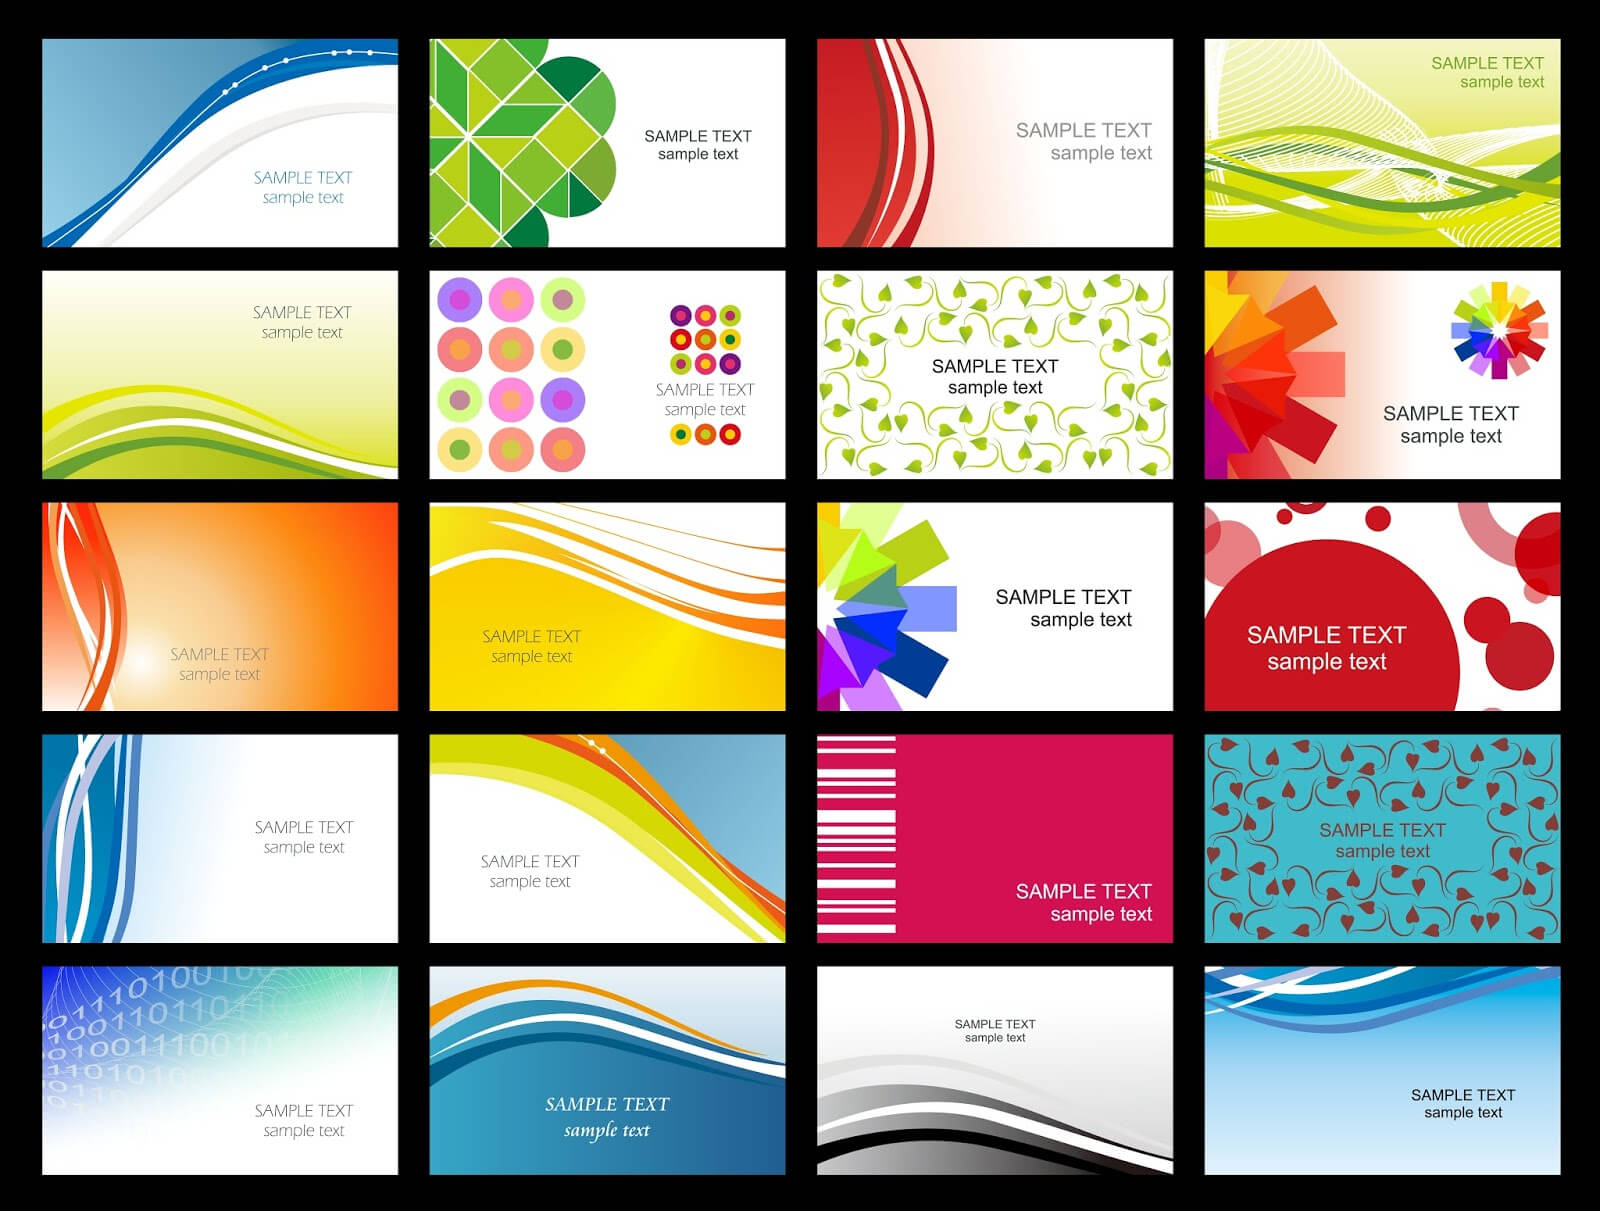 Printable Business Card Template – Business Card Tips Intended For Business Card Template For Google Docs